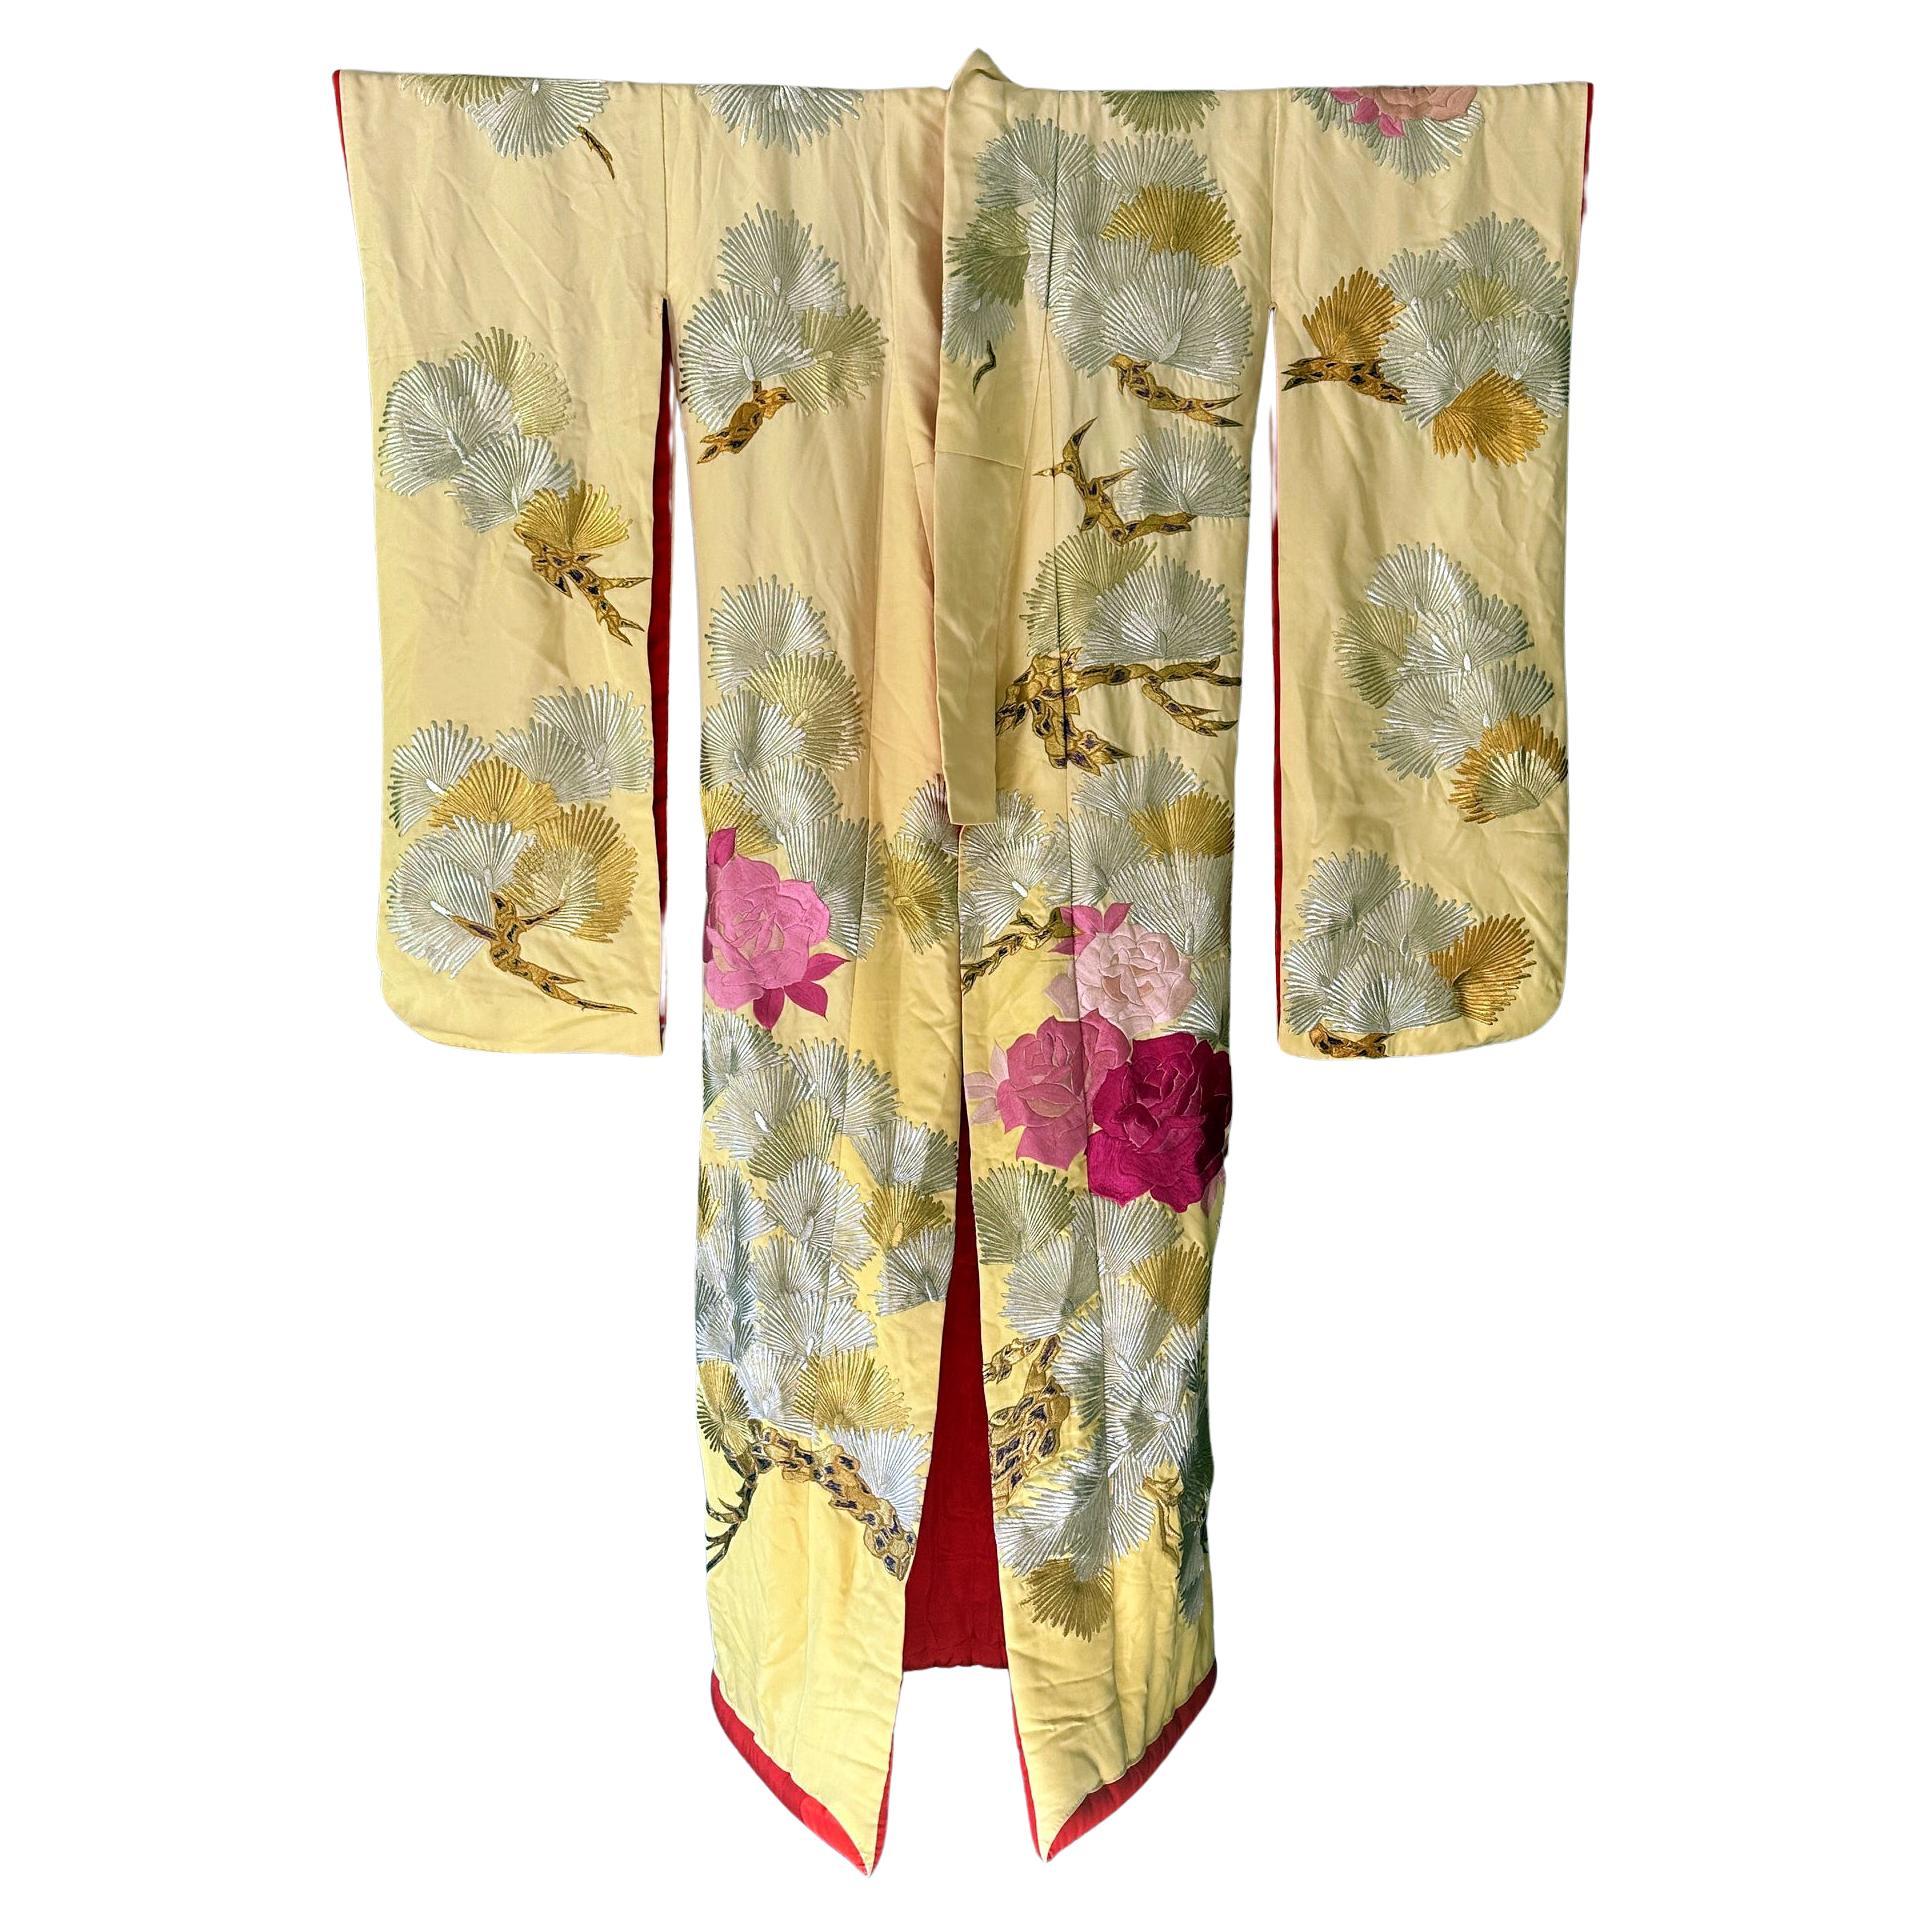 Vintage Japanese Ceremonial Wedding Kimono with Embroidery Designs